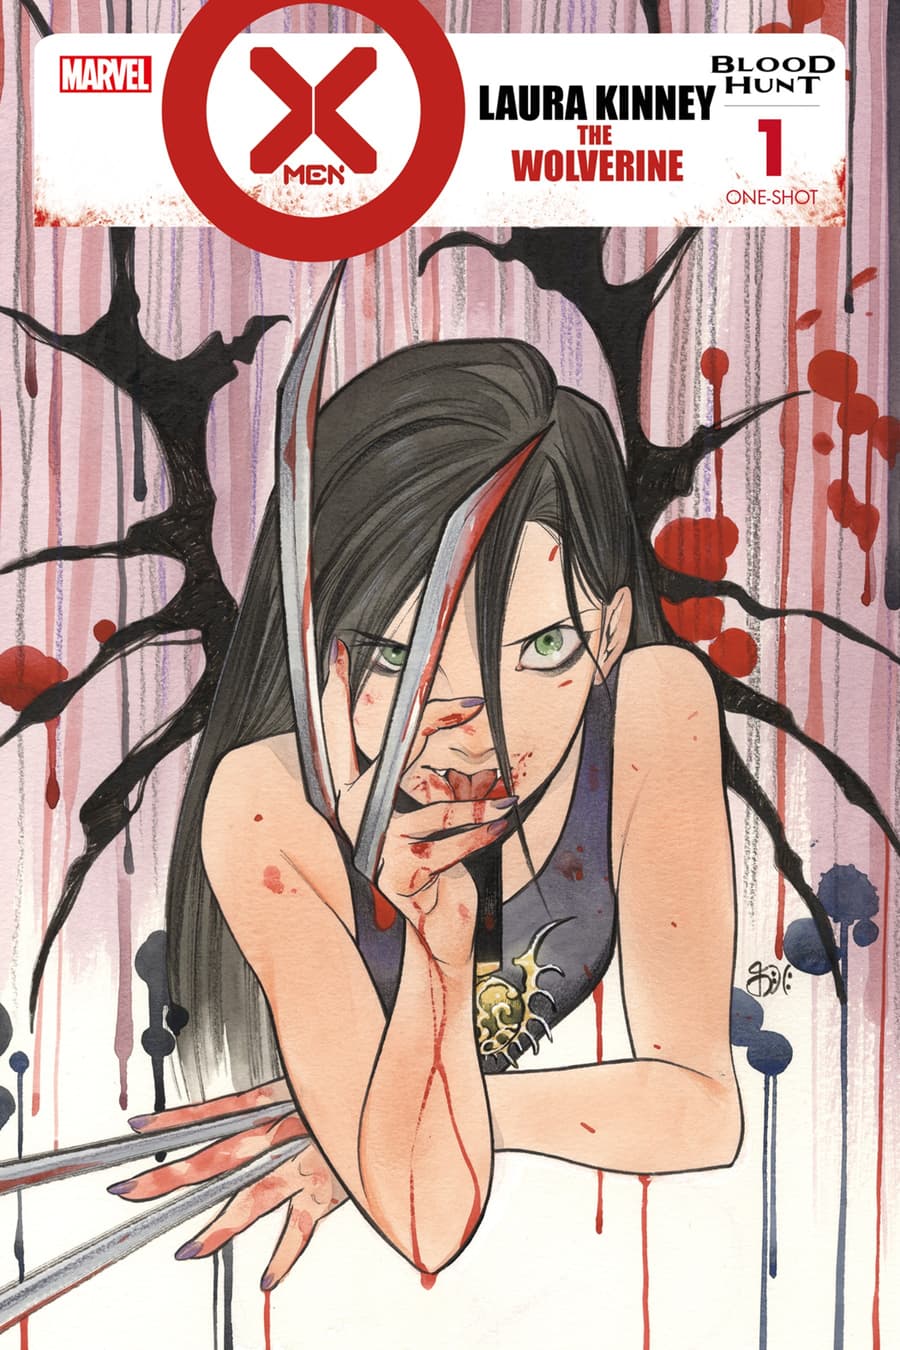 X-MEN: BLOOD HUNT – LAURA KINNEY THE WOLVERINE #1 variant cover by Peach Momoko